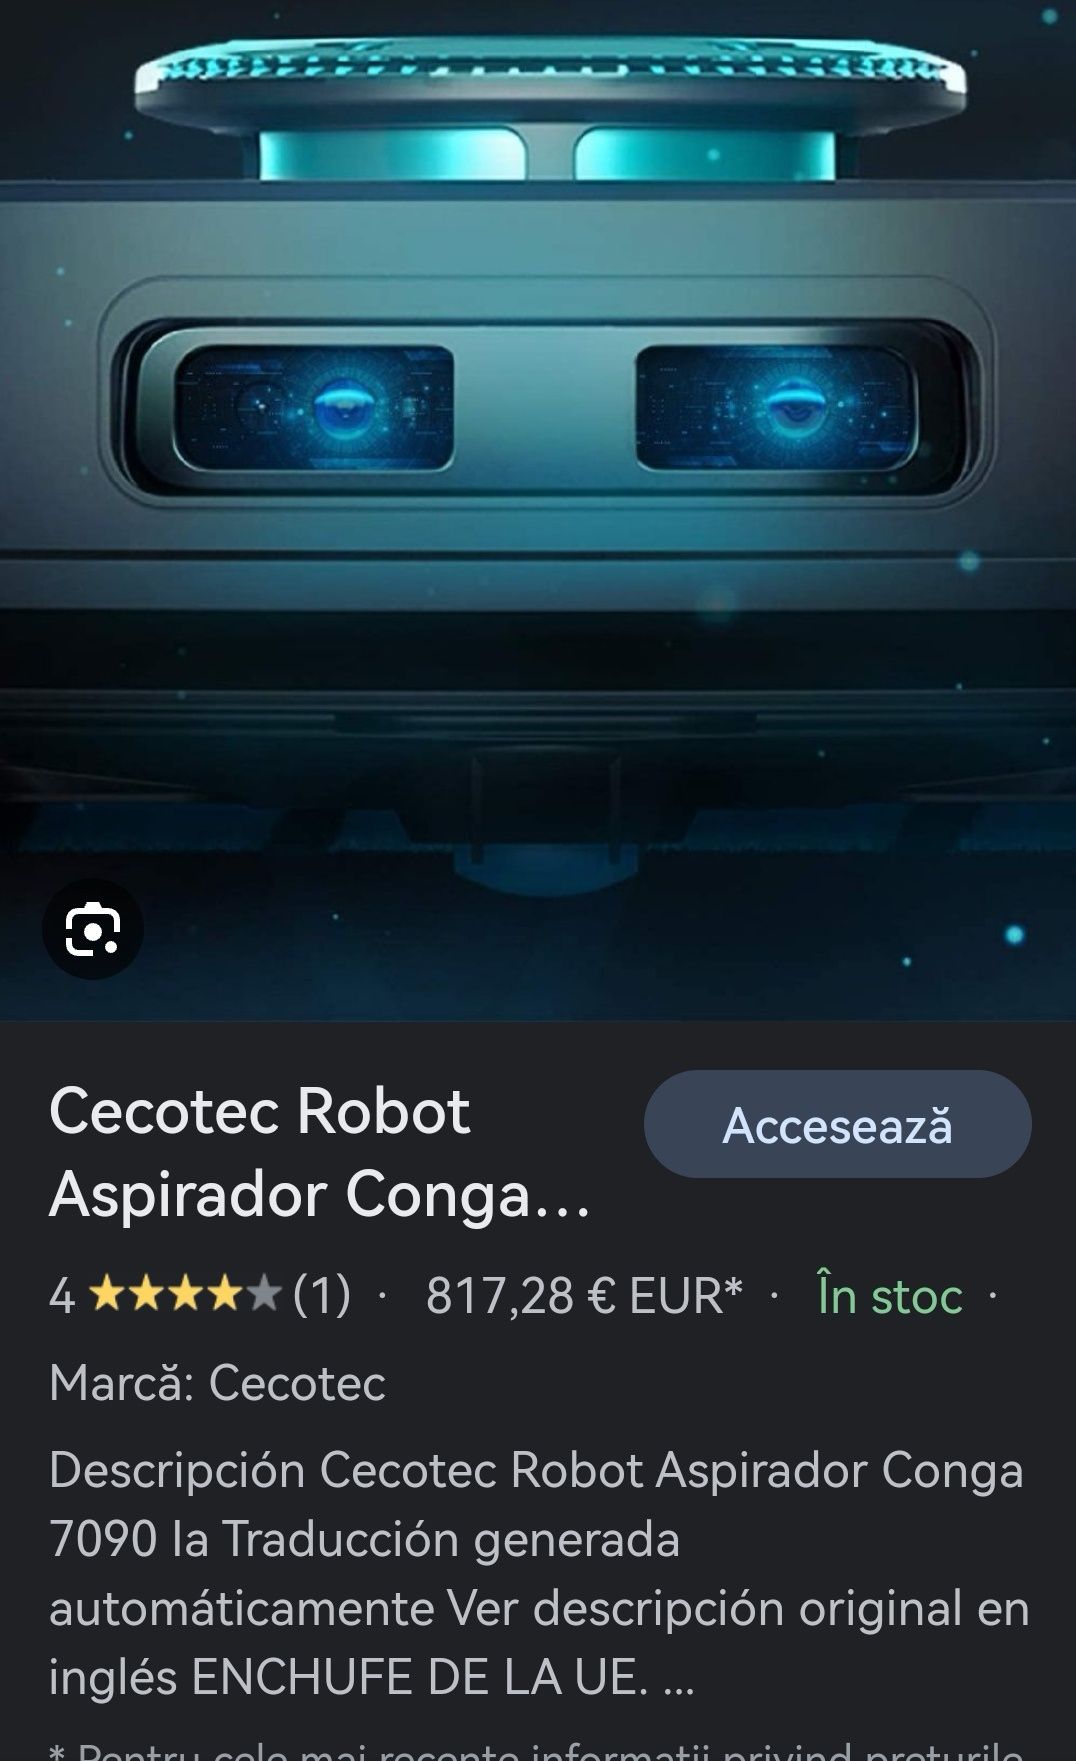 Aspirator Robot Conga Cecotec 7090 AI